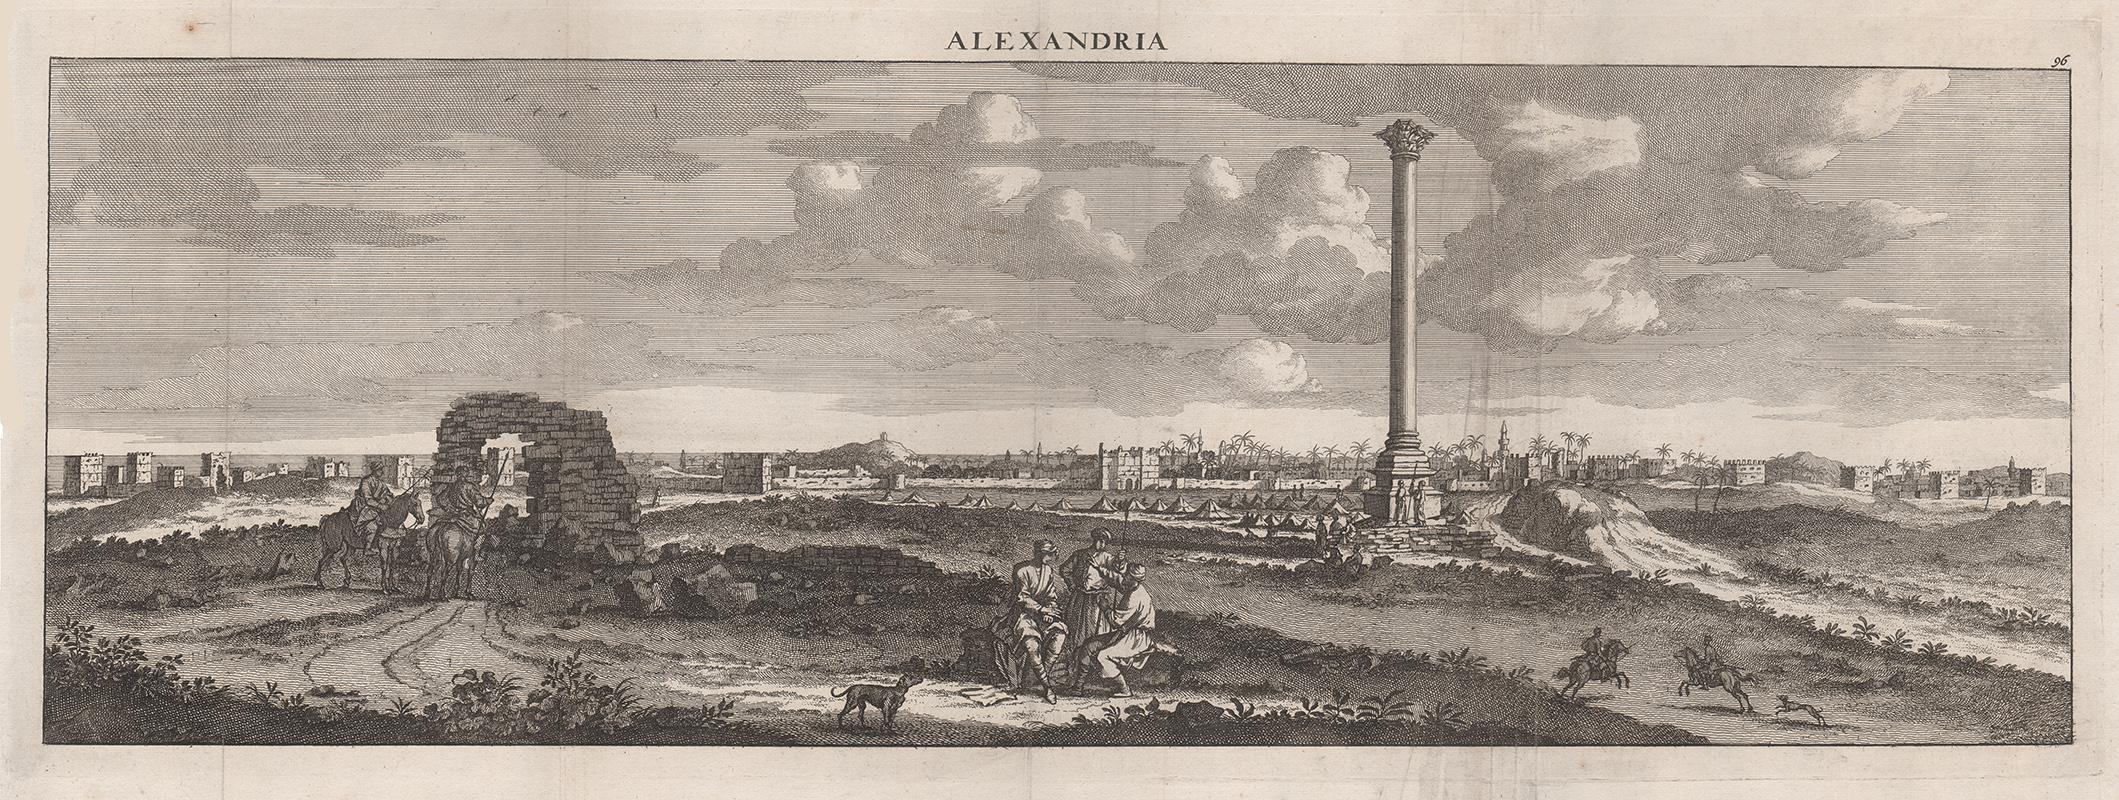 Alexandrie, Égypte, gravure en ligne de cuivre de Cornelius de Bruyn, 1690